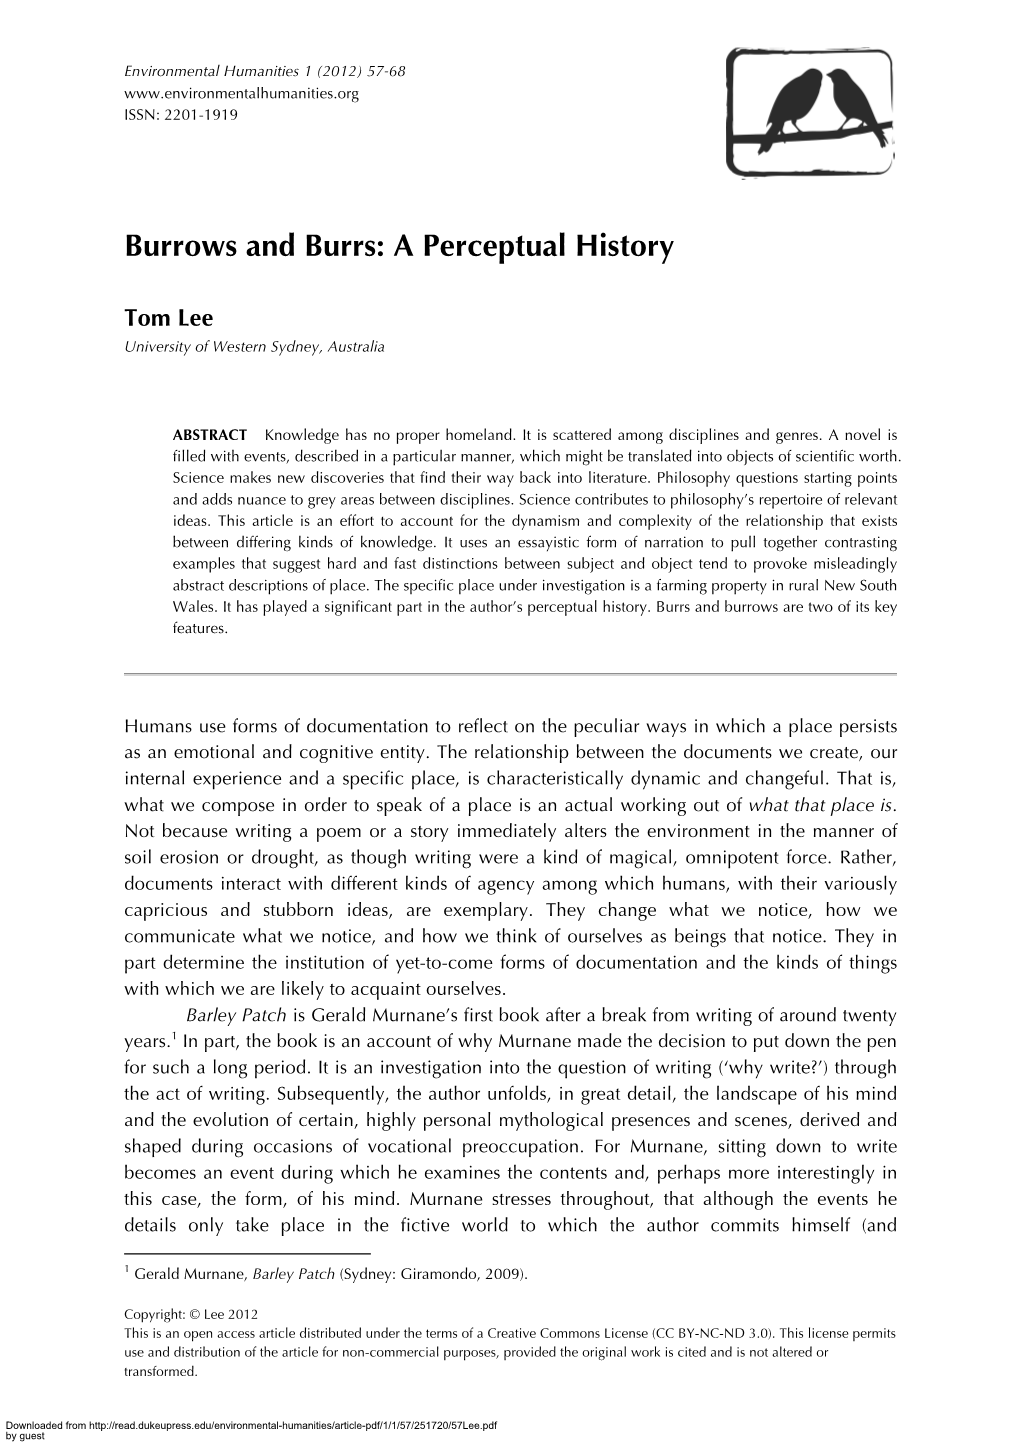 Burrows and Burrs: a Perceptual History